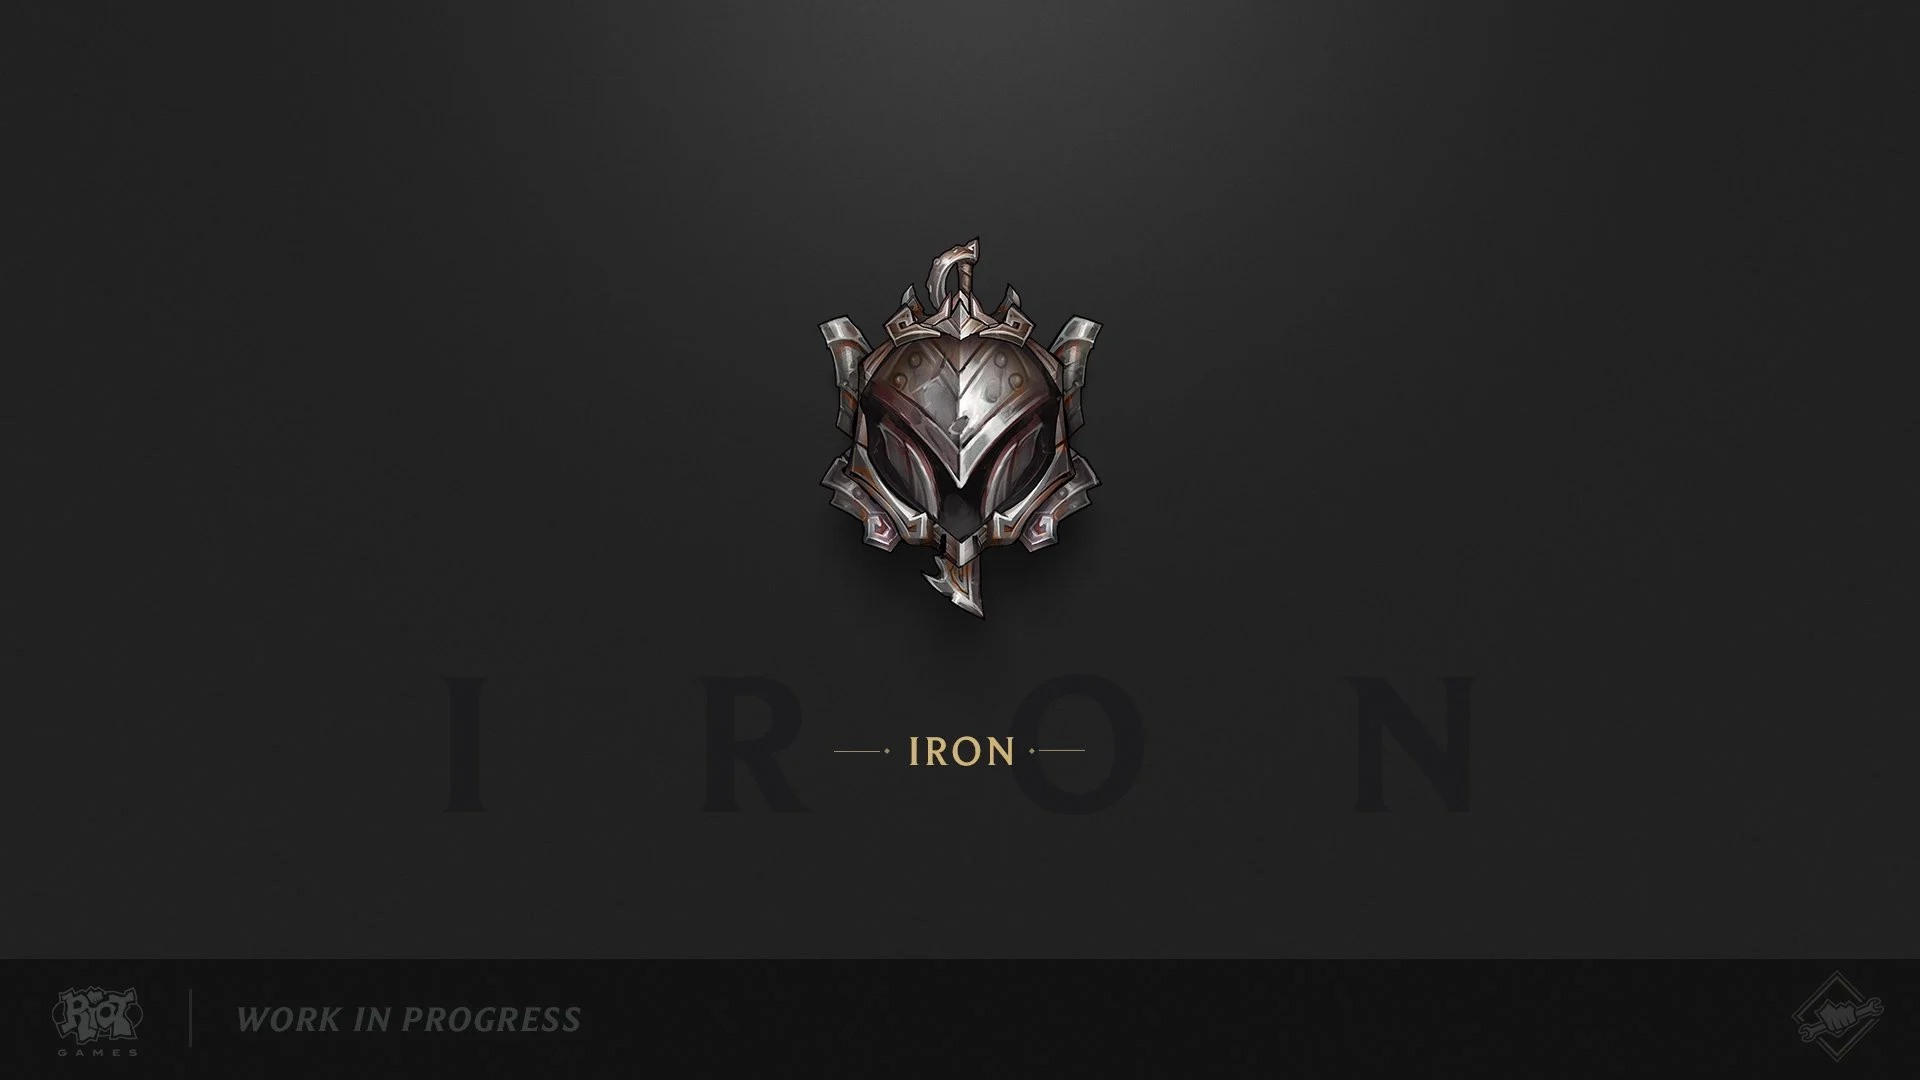 NA [UNK] Iron IV [UNK] Hand De-ranked [UNK] Full Access + Unverified [UNK] 37K BE